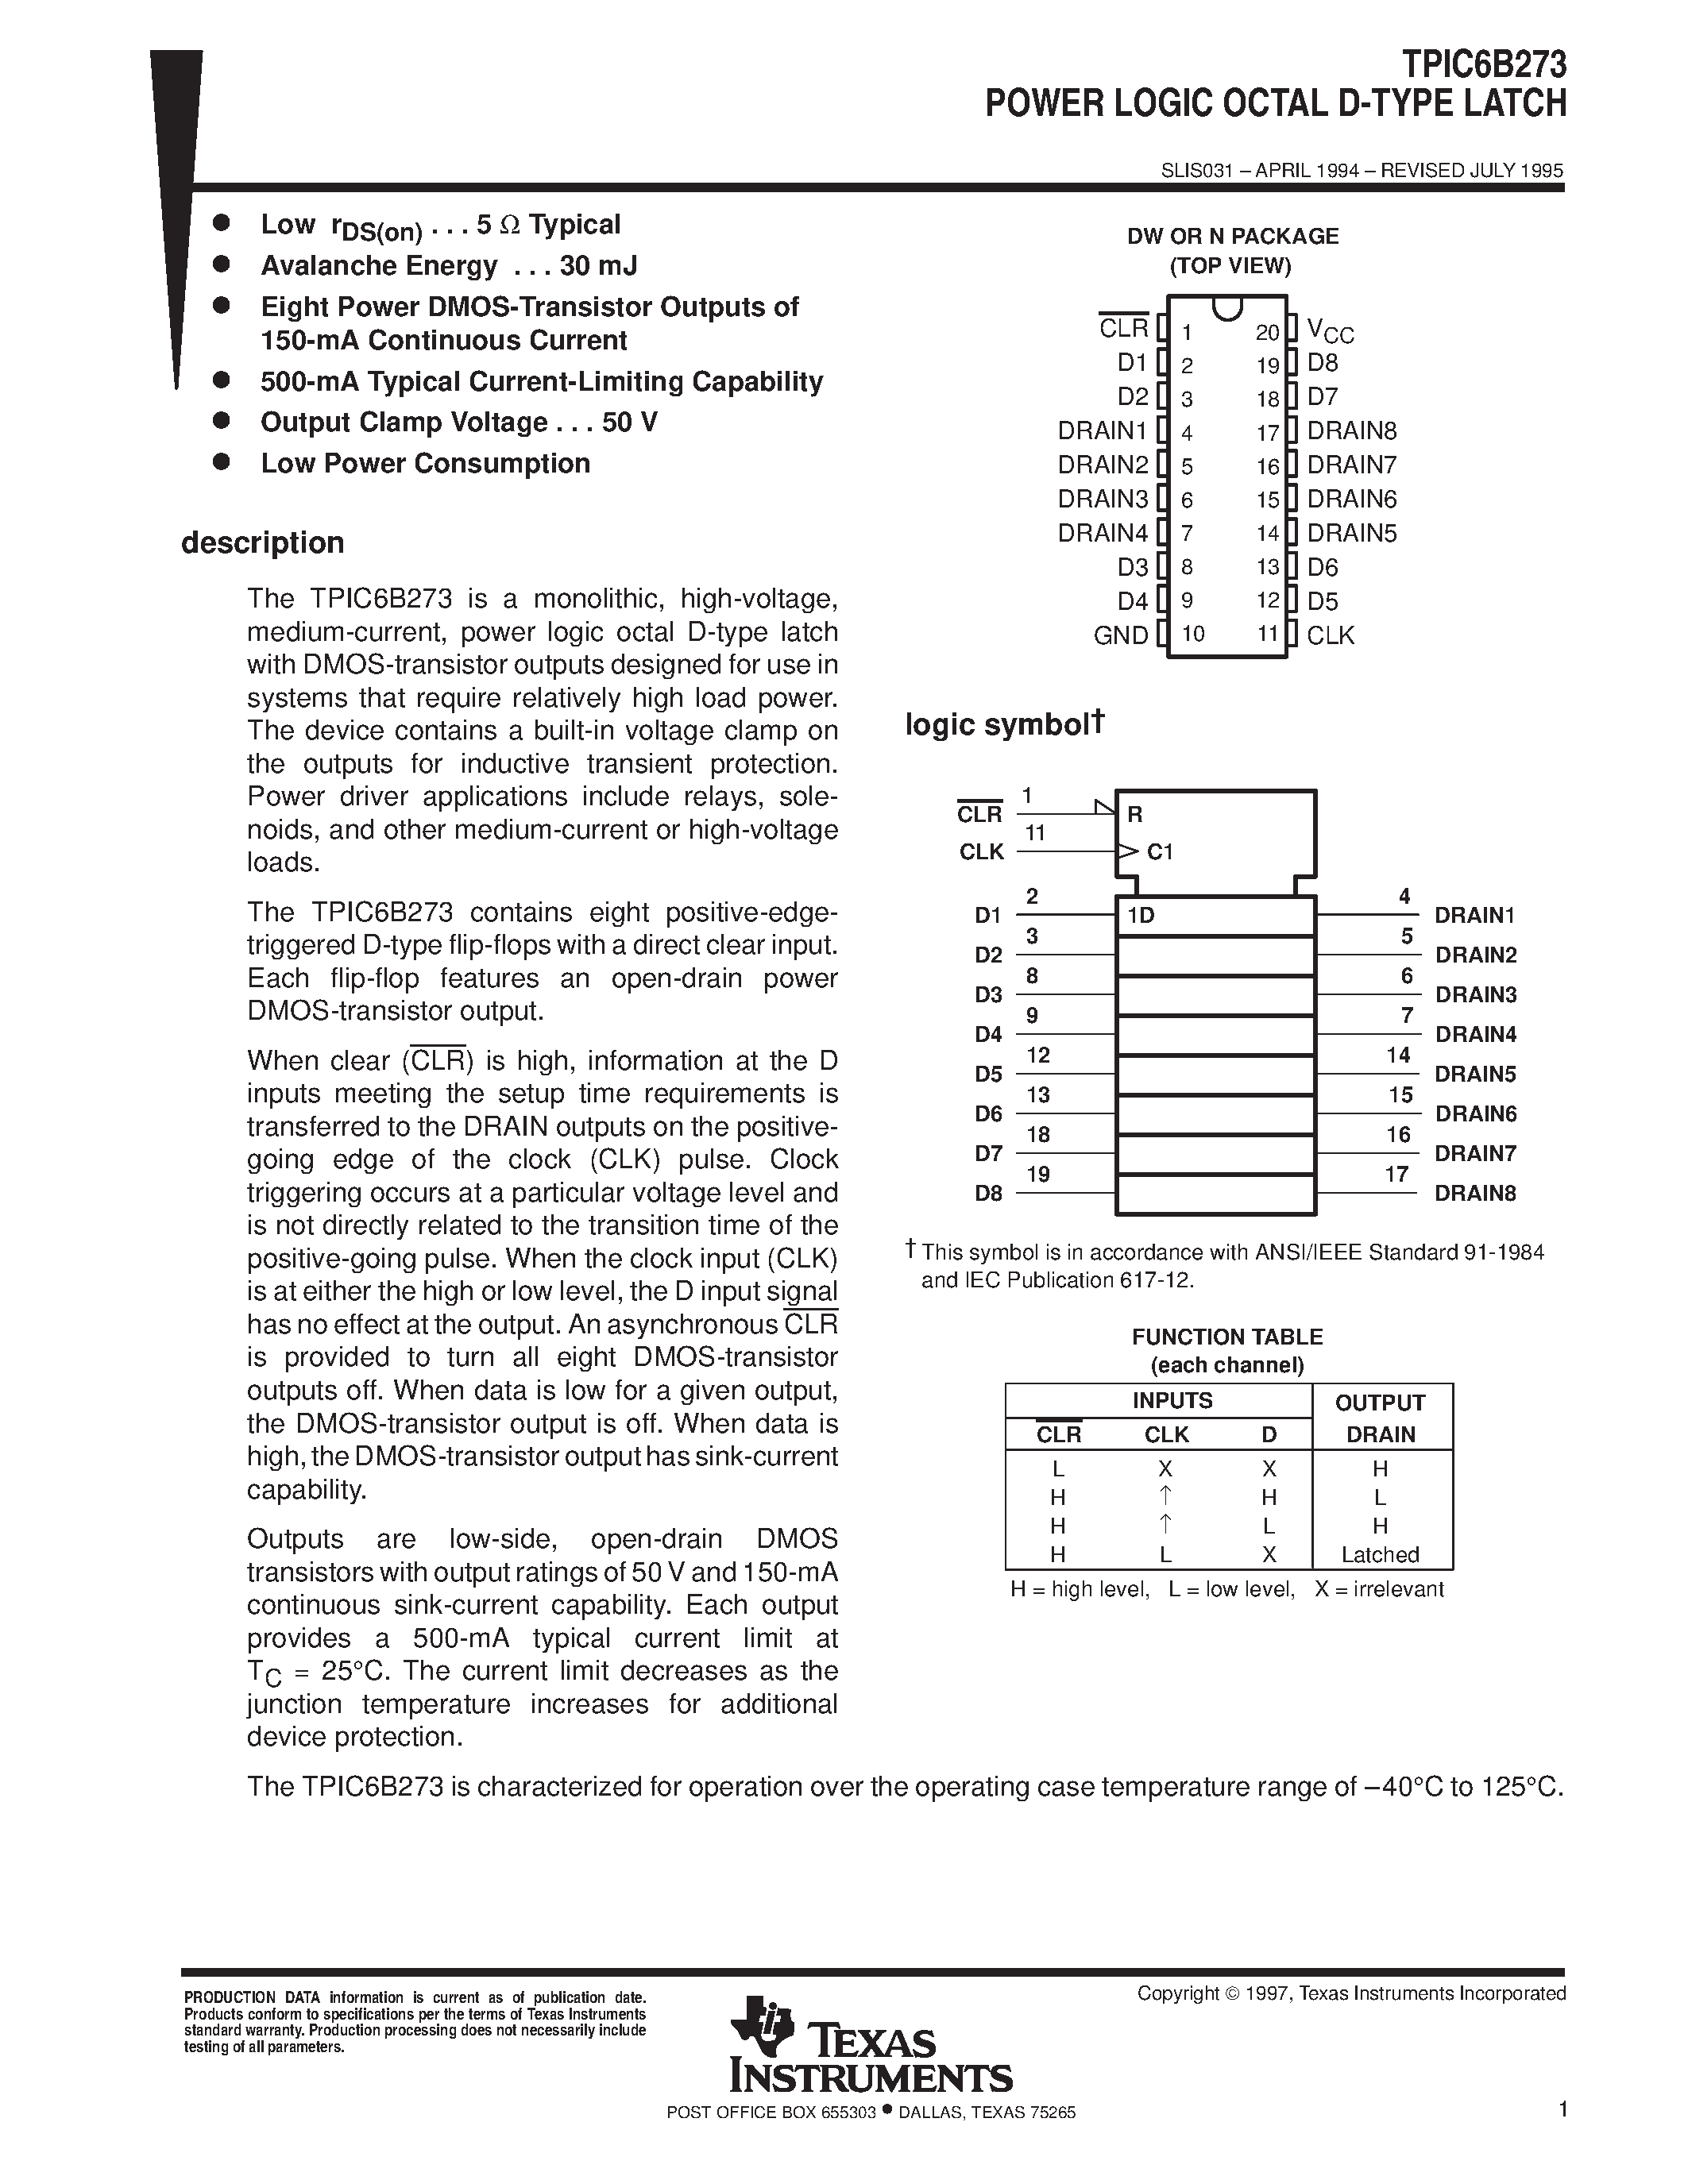 Datasheet TPIC6B273 - POWER LOGIC OCTAL D-TYPE LATCH page 1